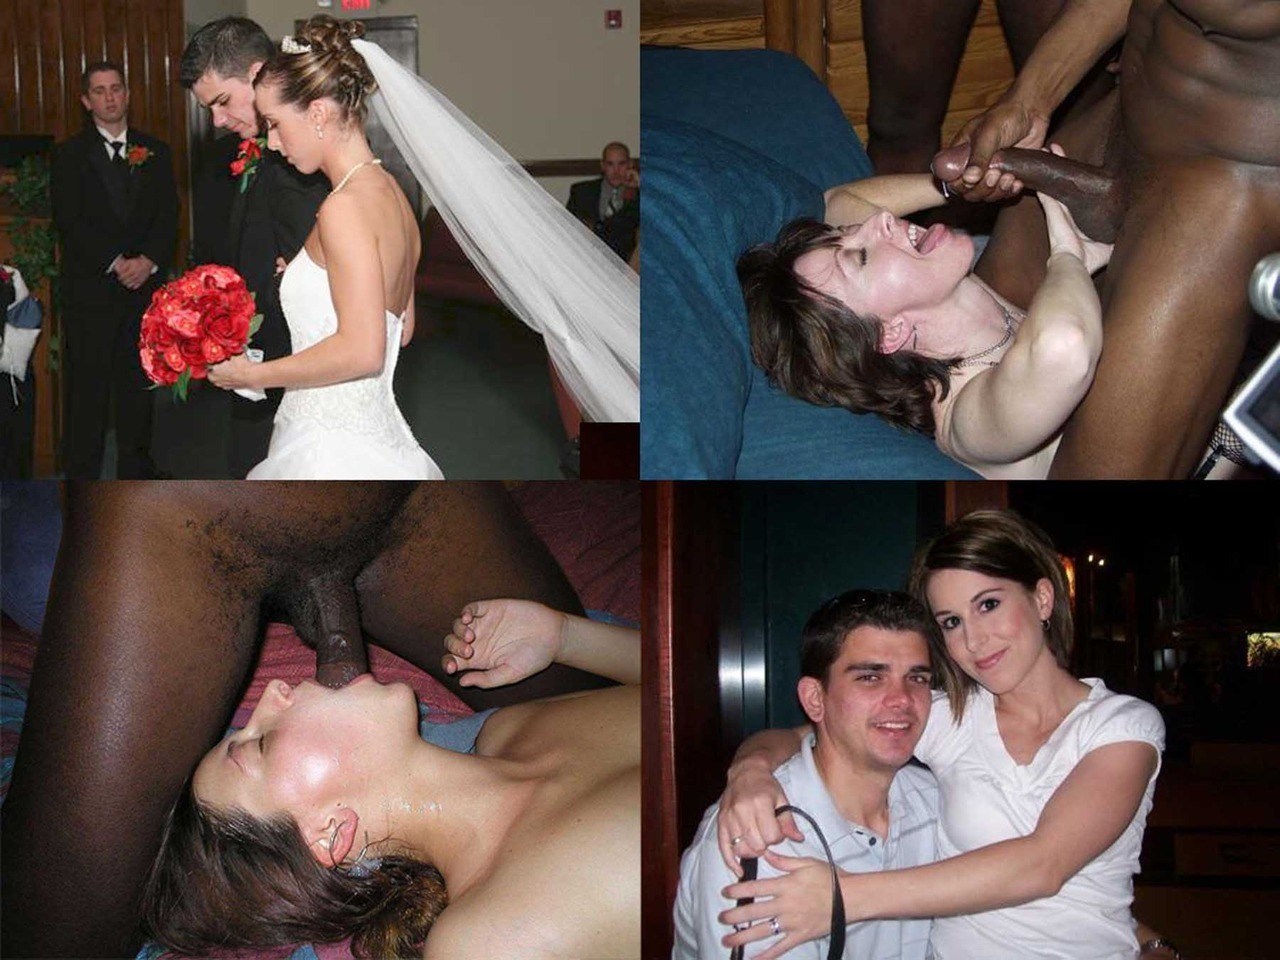 Erotic Interracial Wife - Erotic Wife of Someone's (58 photos) - motherless porn pics